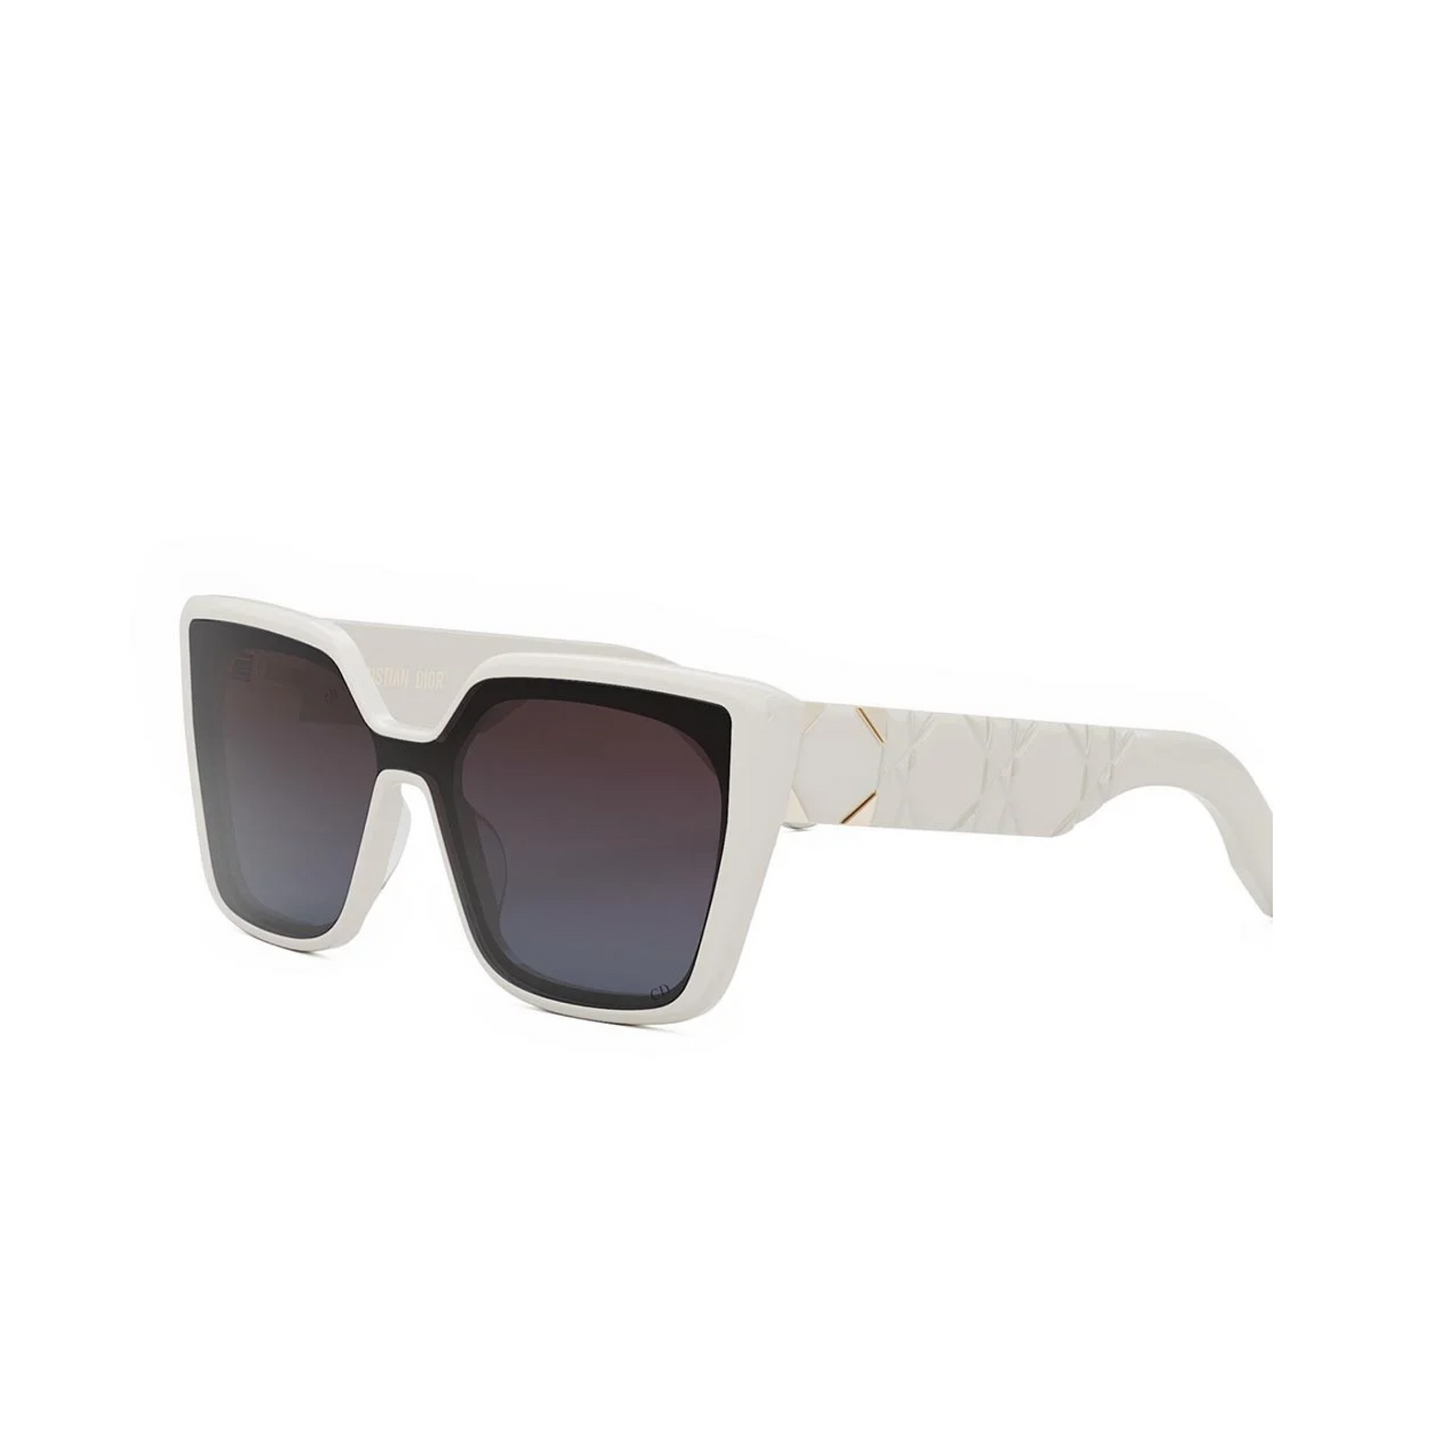 DiorLady 95.22 S2F 95A100 Sunglasses in White